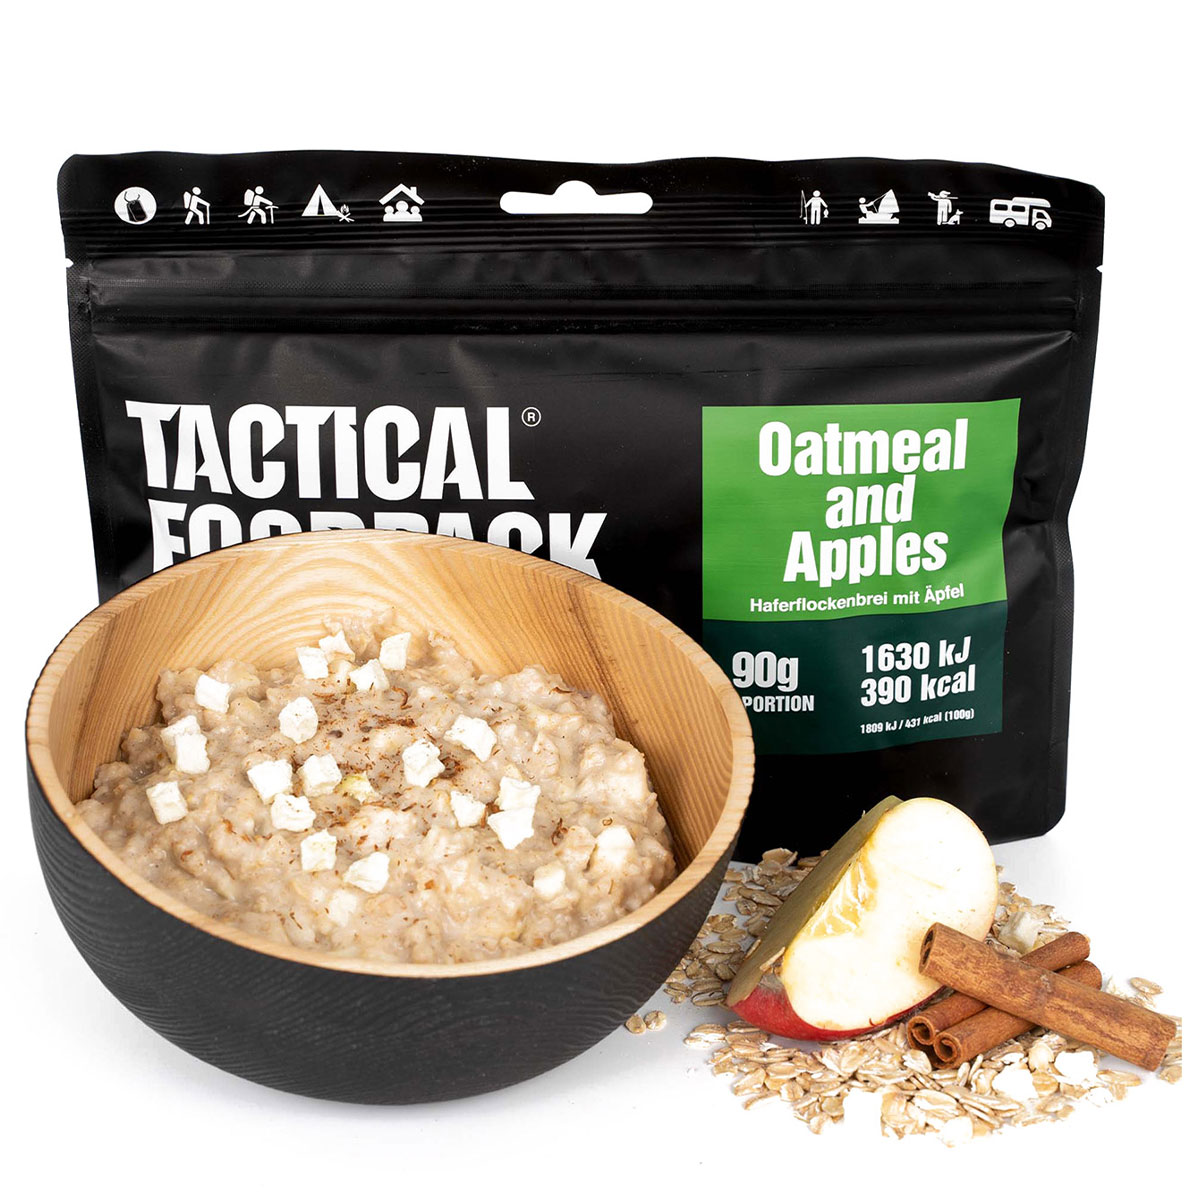 Сублімовані продукти Tactical Foodpack - Вівсянка з яблуками 90 г